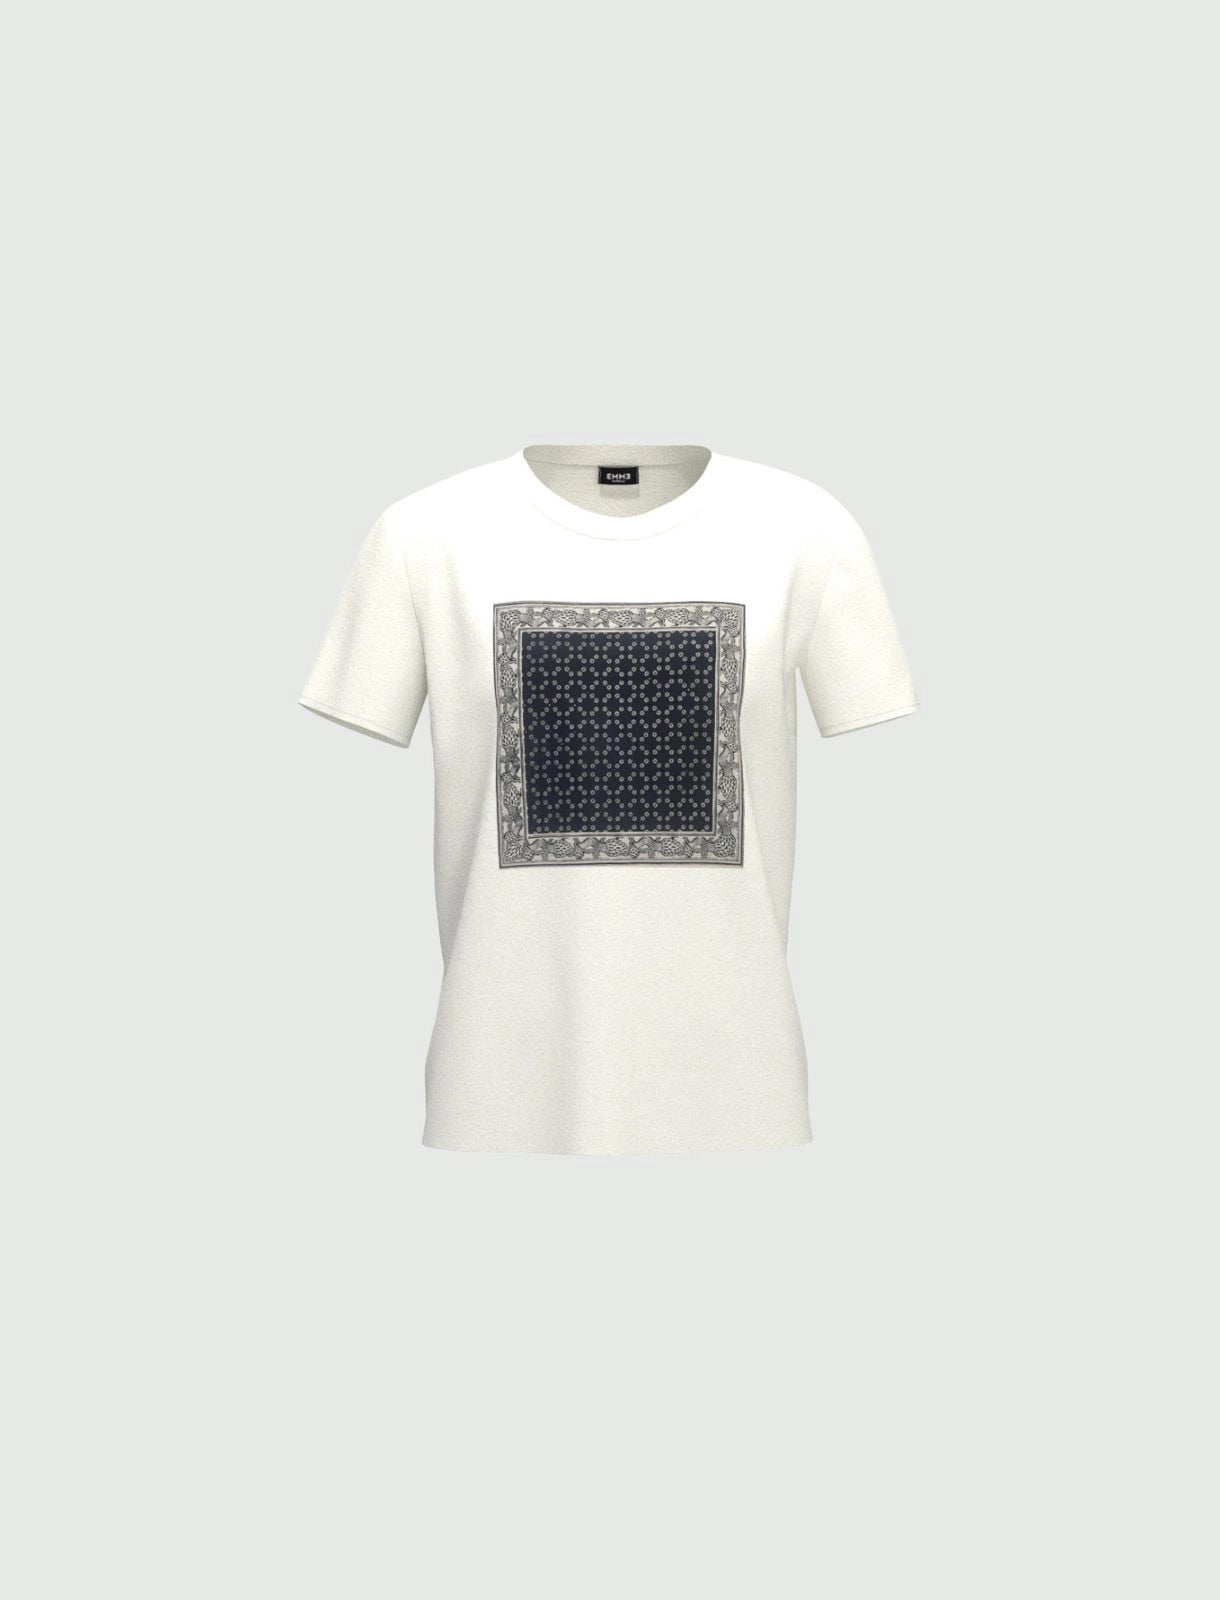 Olpe T-Shirt (Navy Geometric)